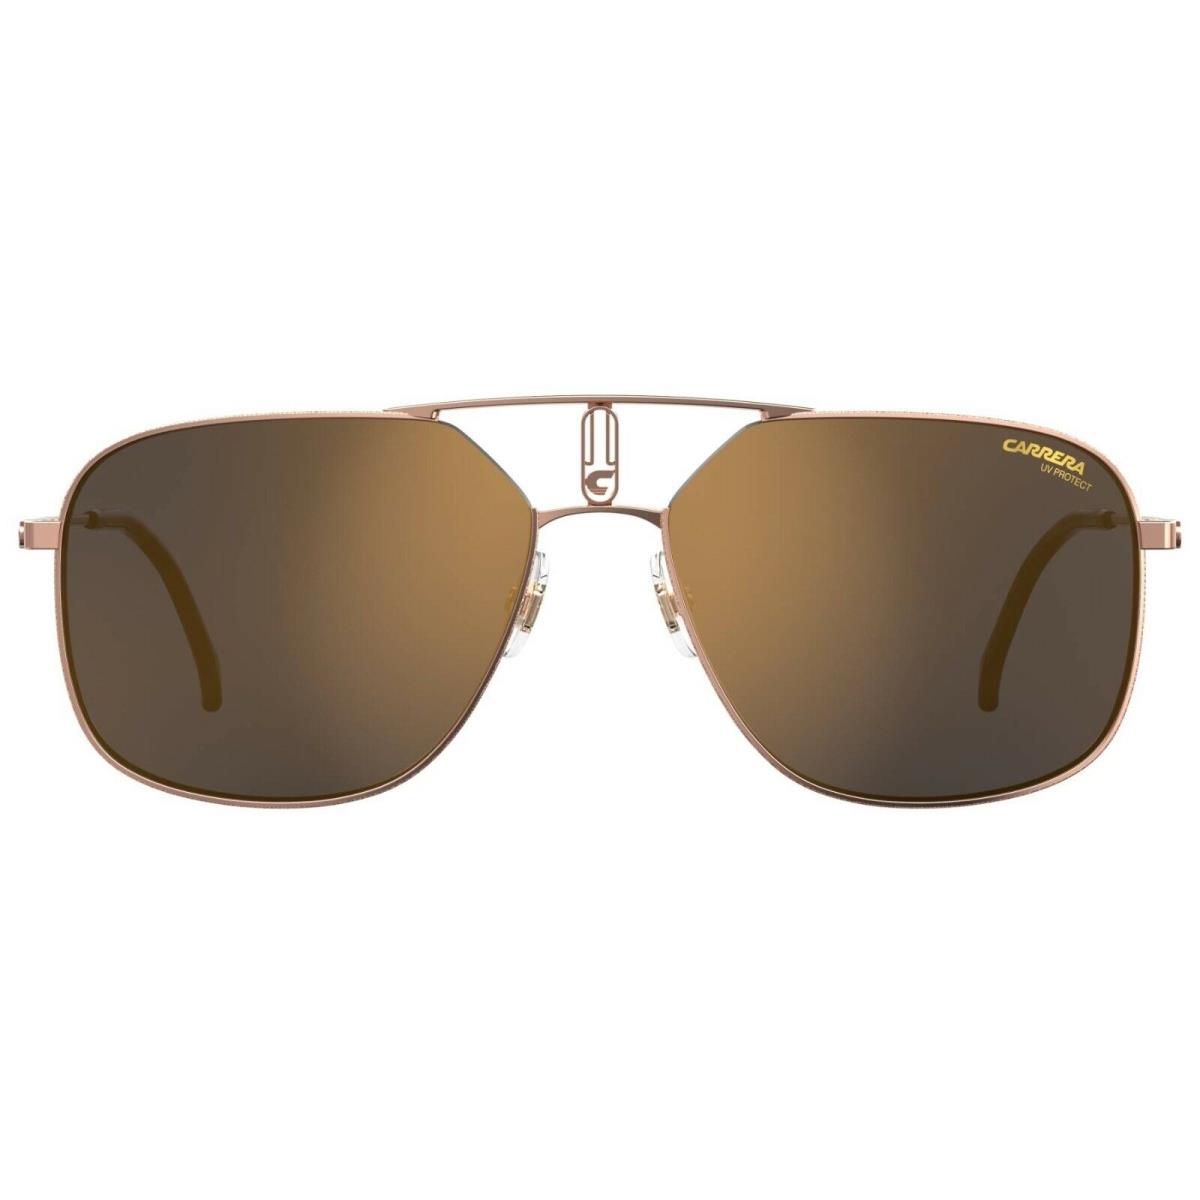 Carrera sunglasses  - Gold Copper Frame, Grey Gold Lens, Gold Copper Manufacturer